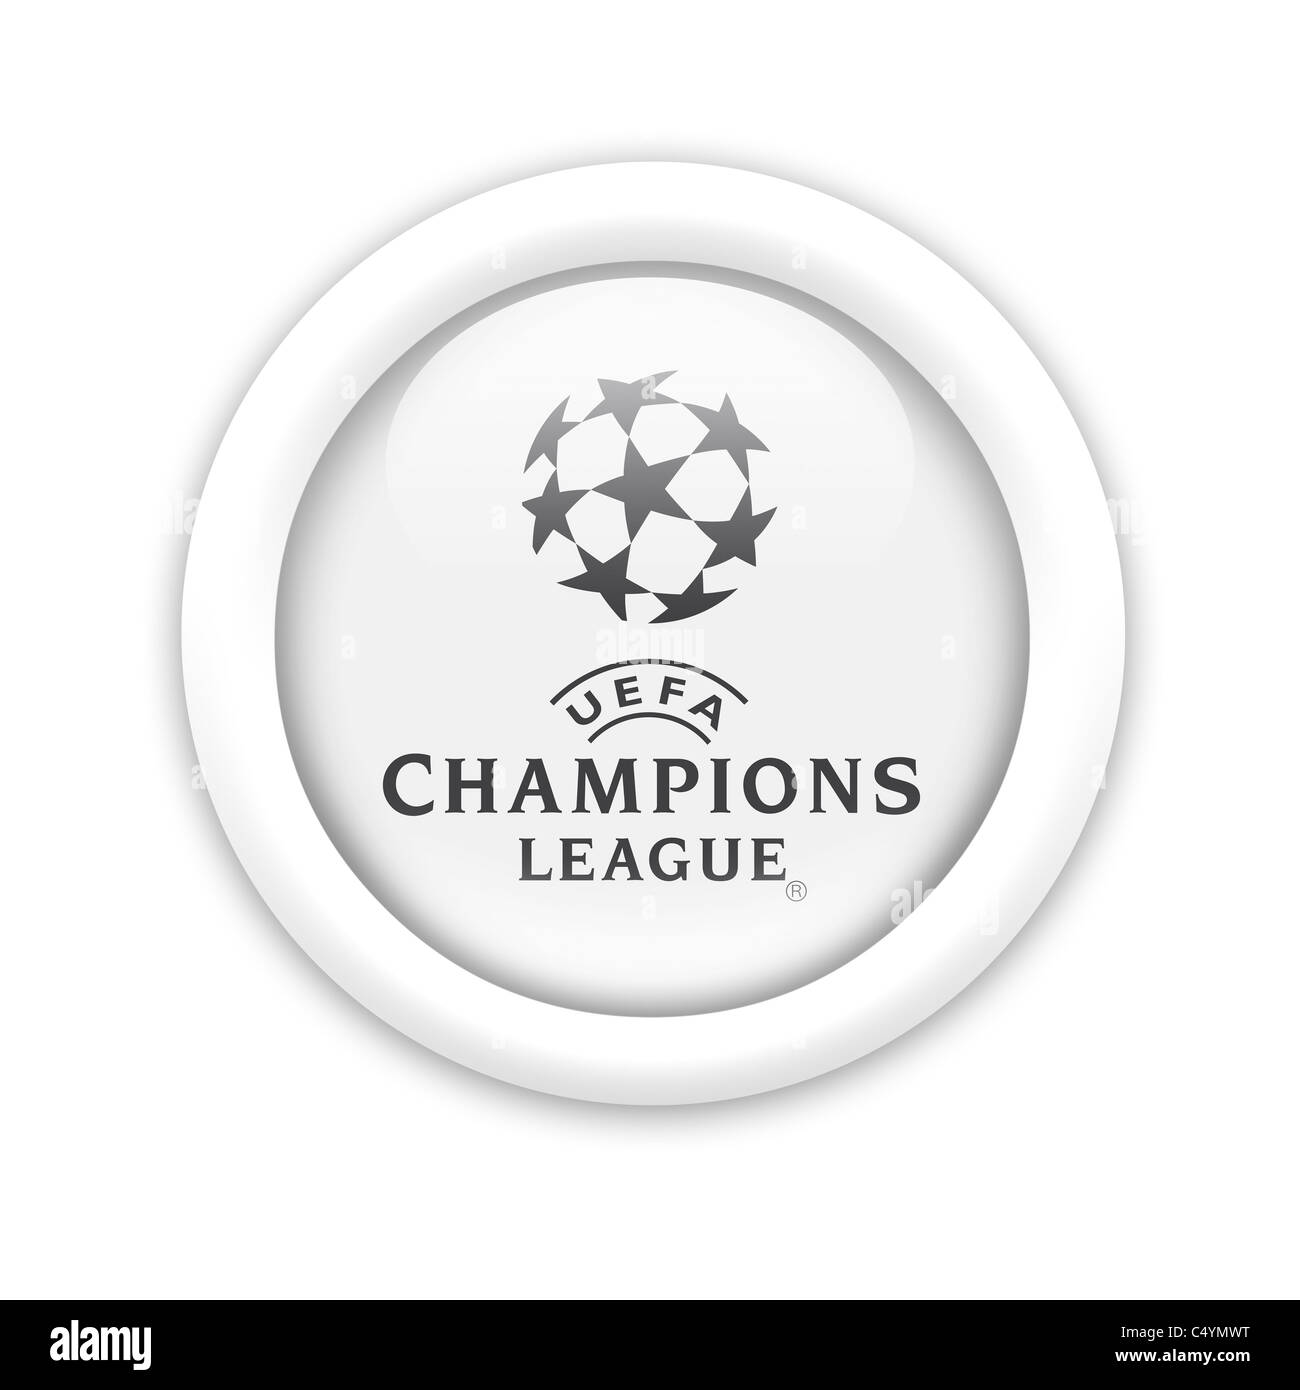 Champions League UEFA logo flag symbol icon Stock Photo